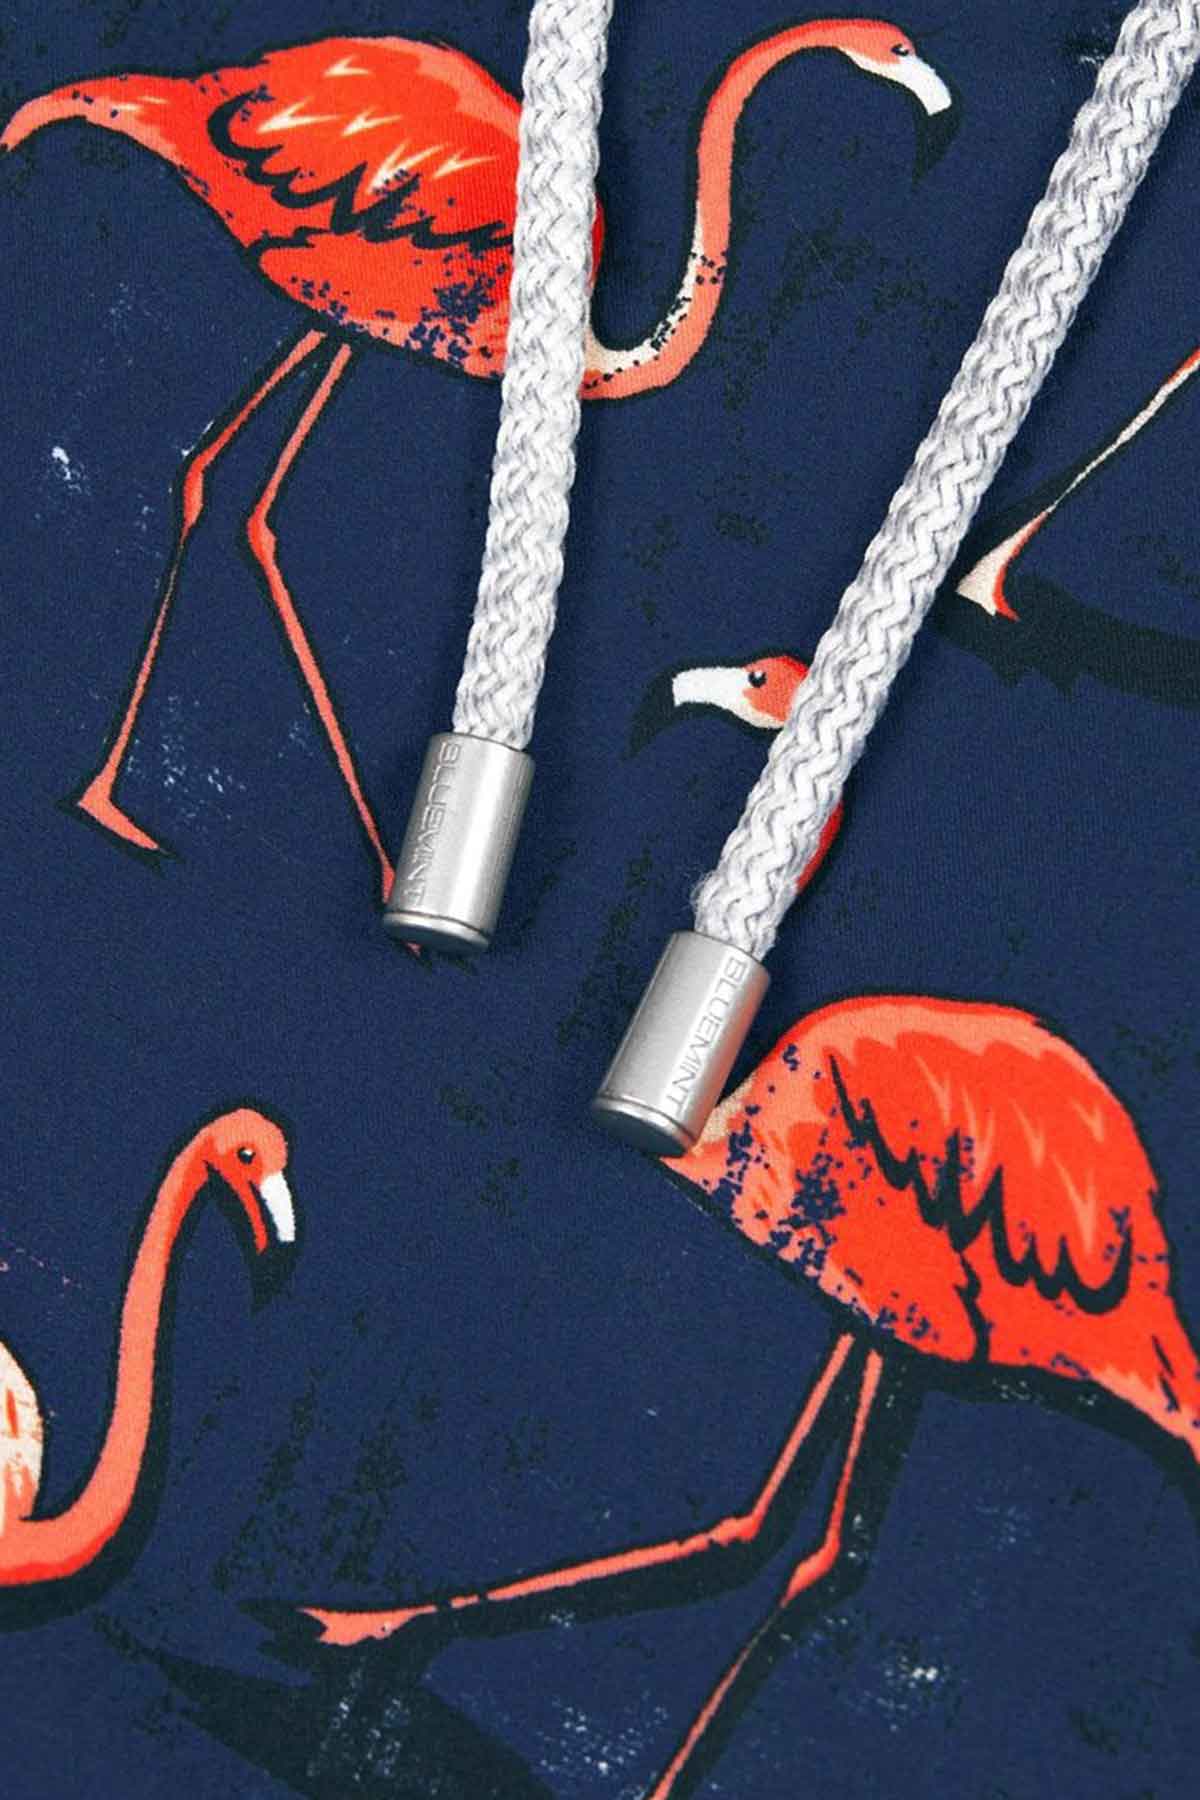 Bluemint Arthus Stretch Midnight Flamingo Şort Mayo-Libas Trendy Fashion Store